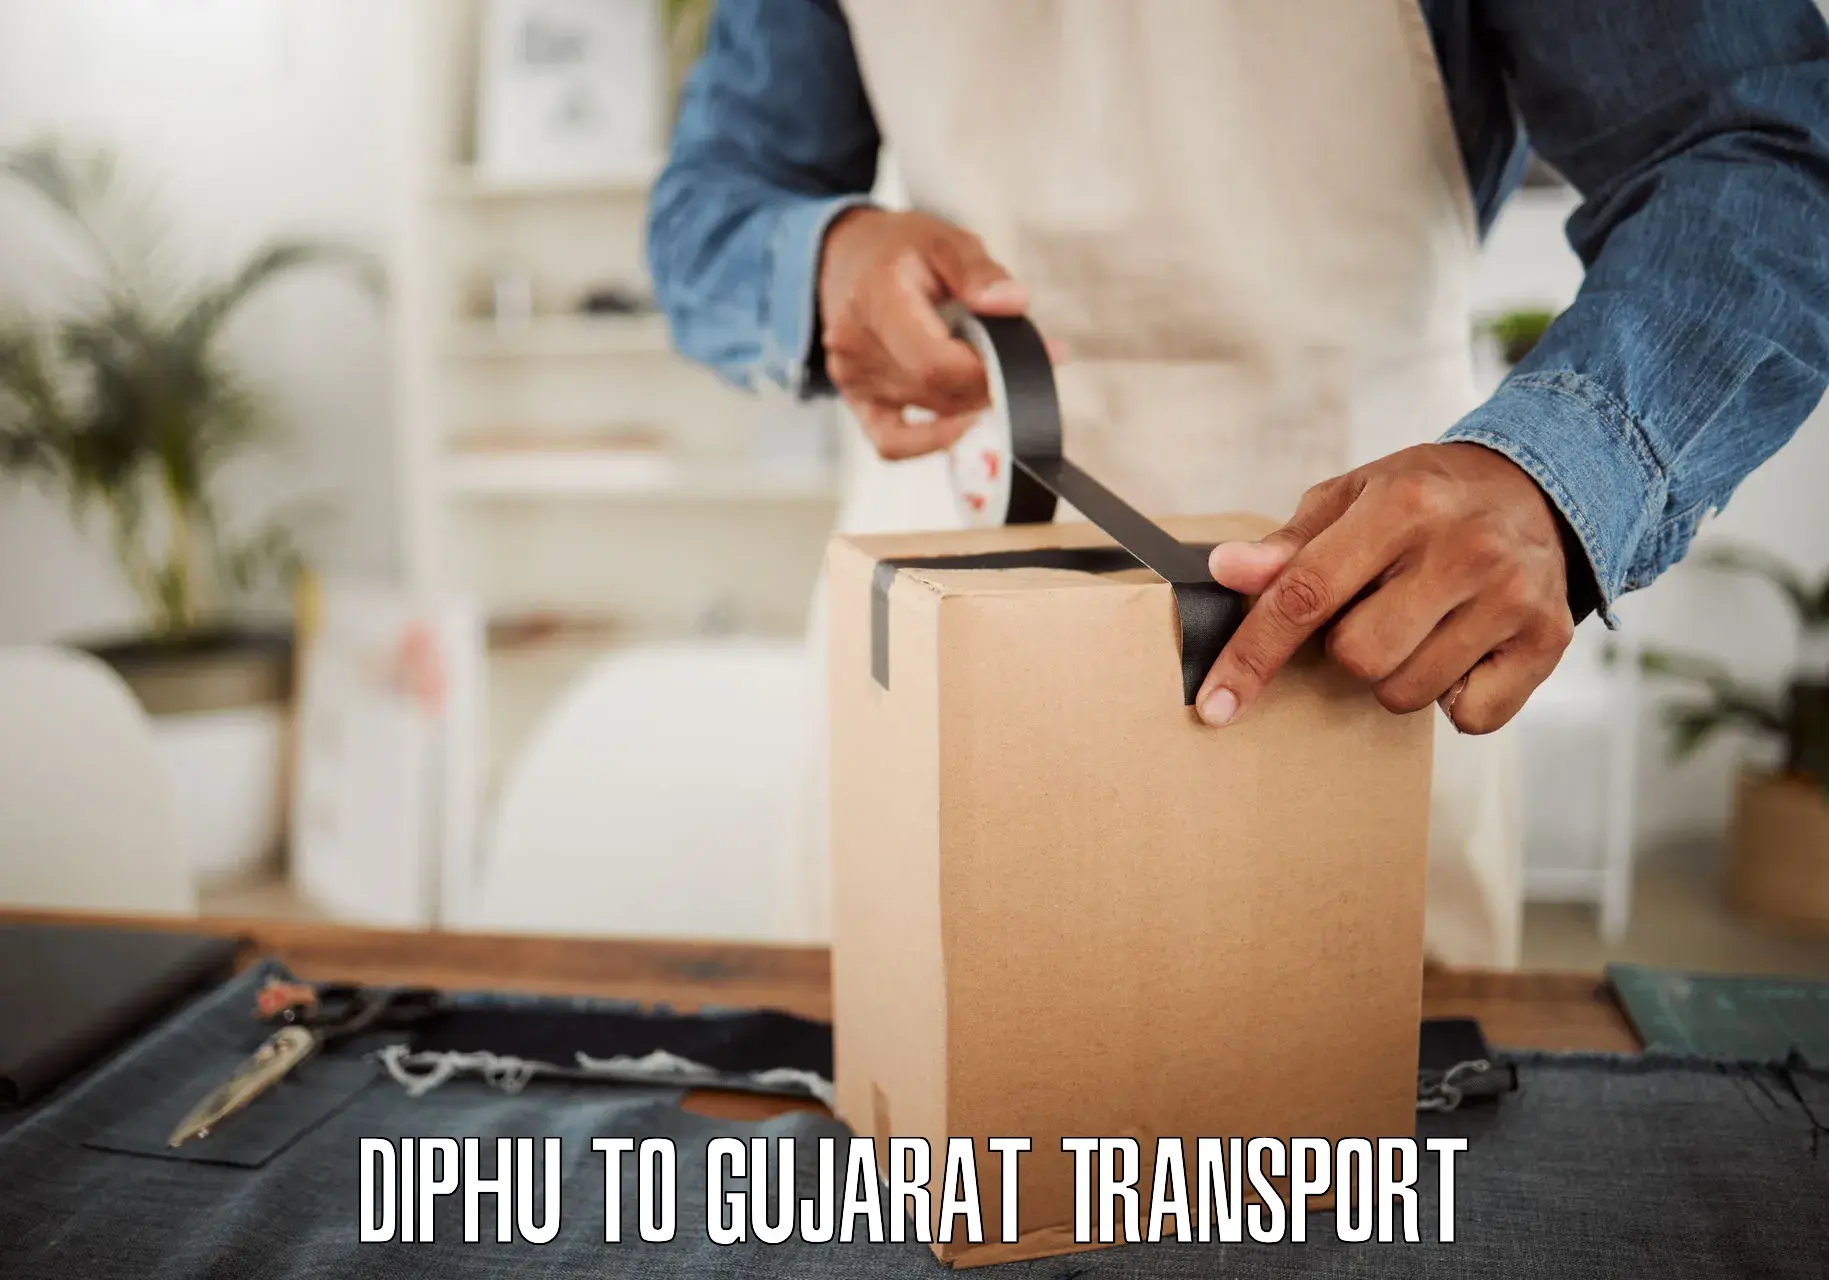 Pick up transport service Diphu to Surat